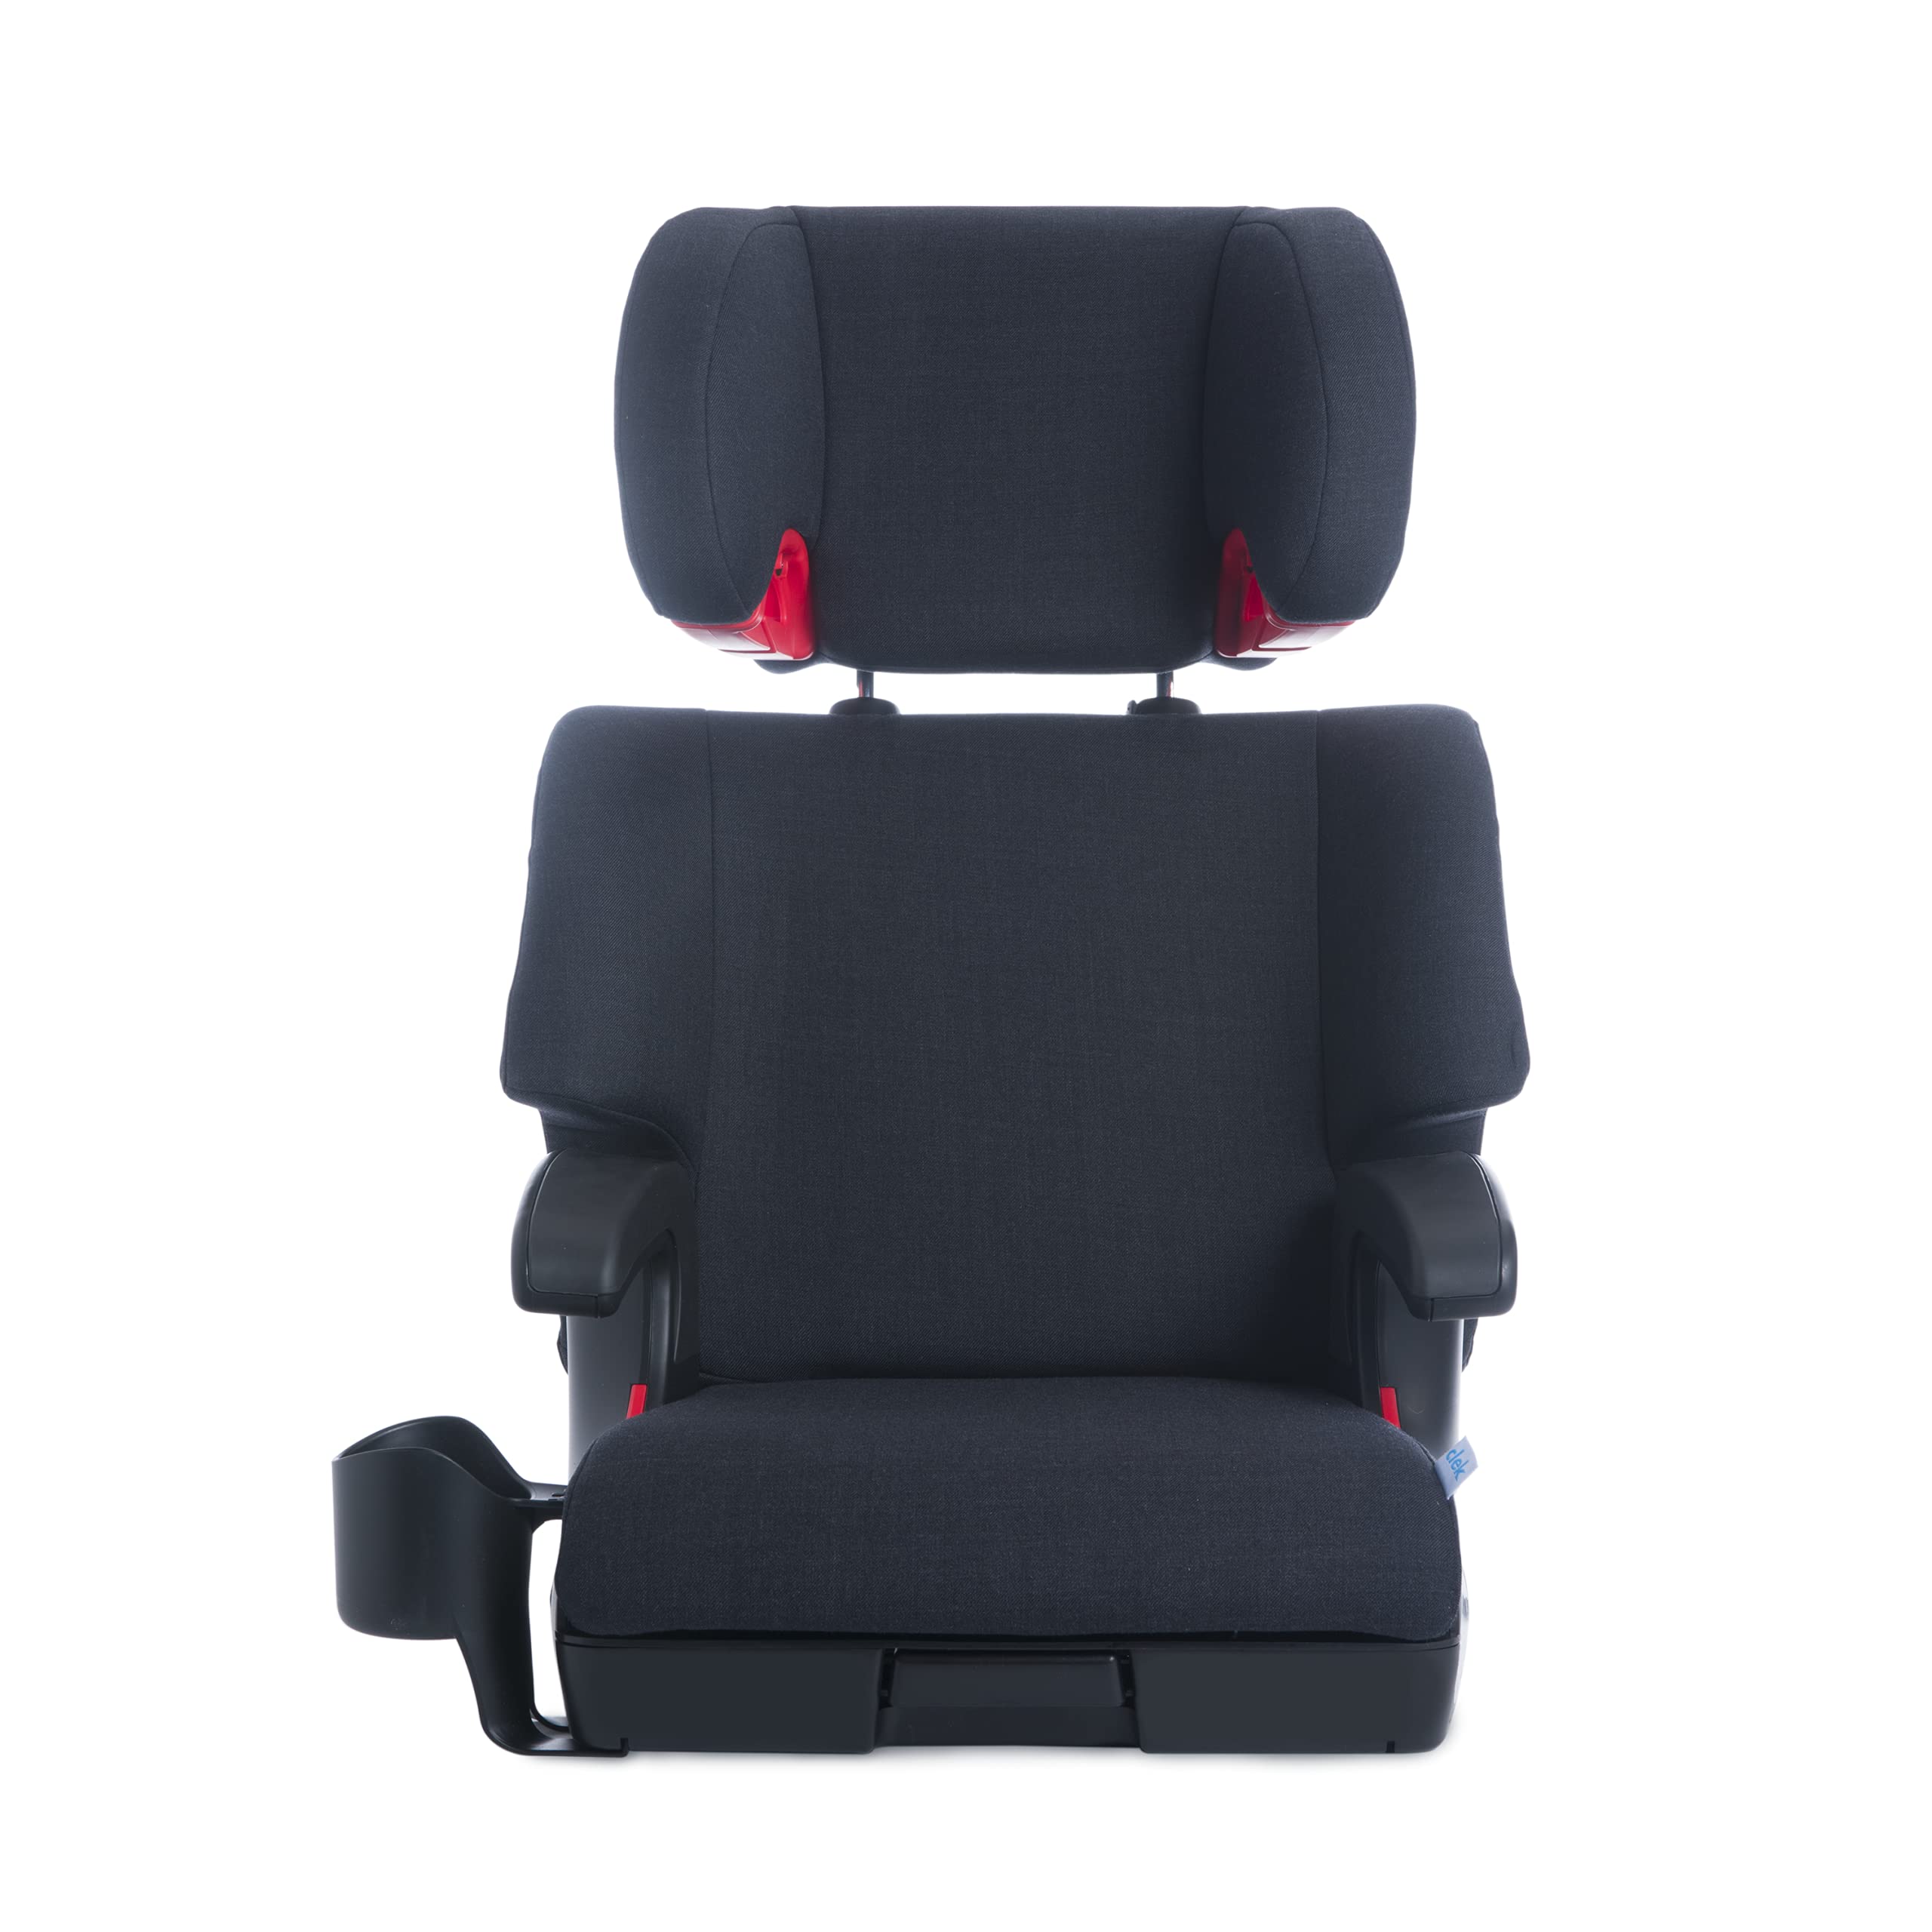 Clek Oobr High Back Booster Car Seat with Rigid Latch, Mammoth (Flame Retardant Free Merino Wool + Tencel Blend)